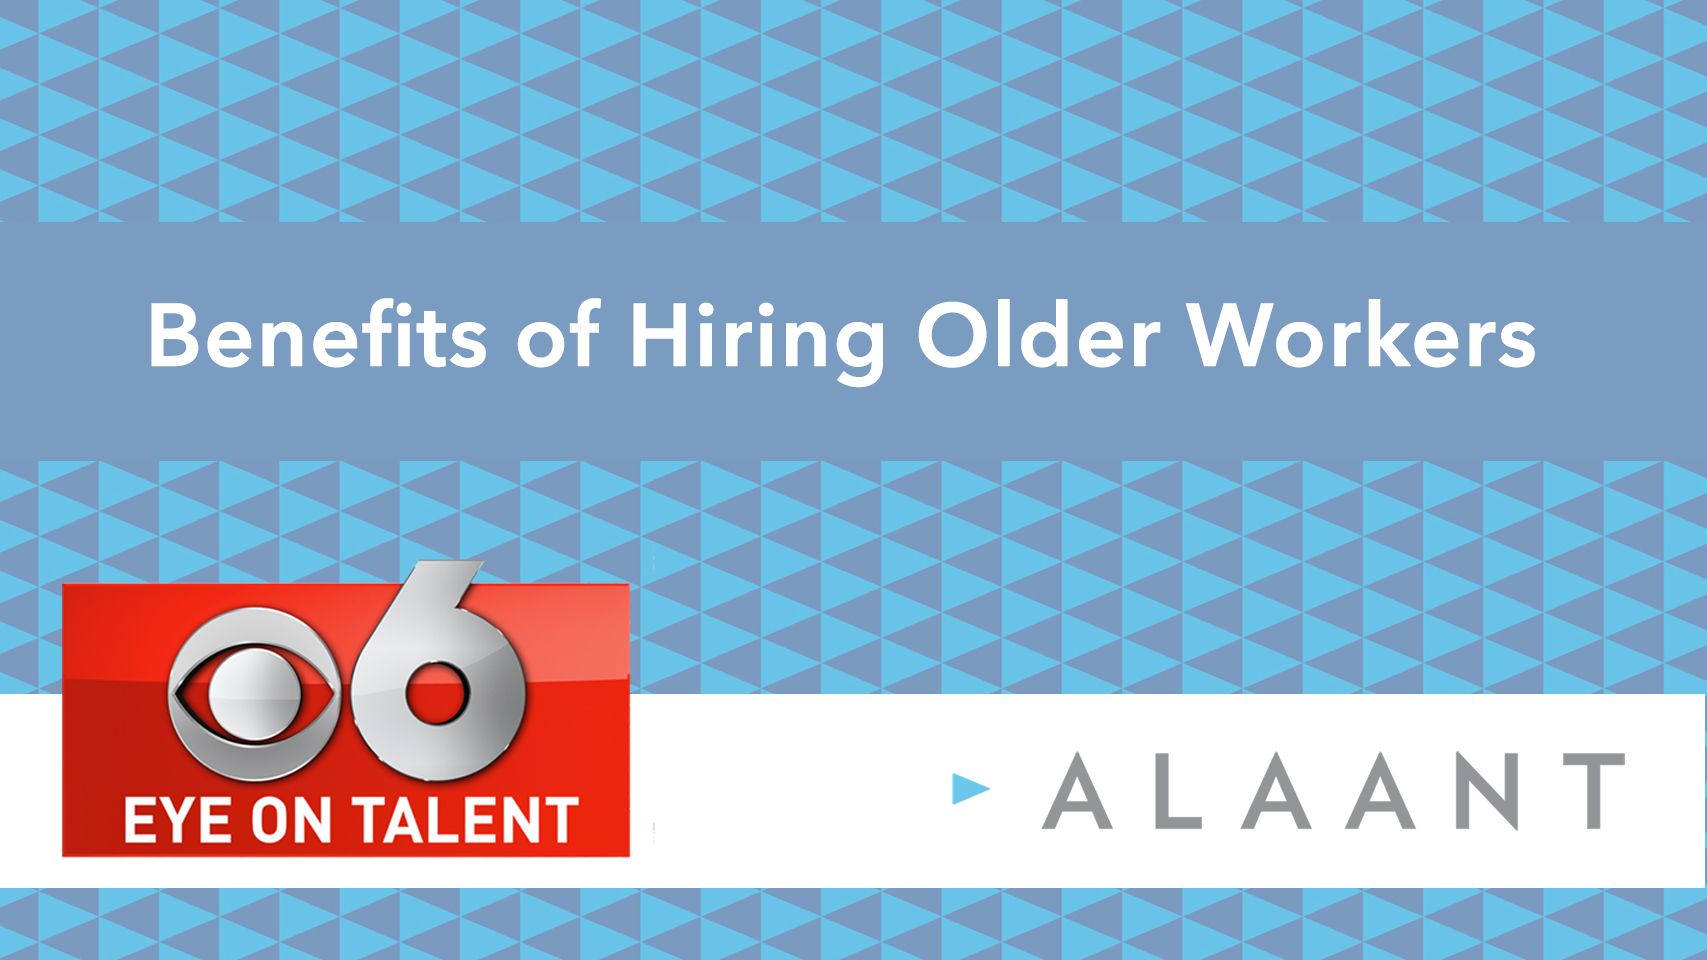 Alaant Eye on Talent Benefits of Hiring Older Workers